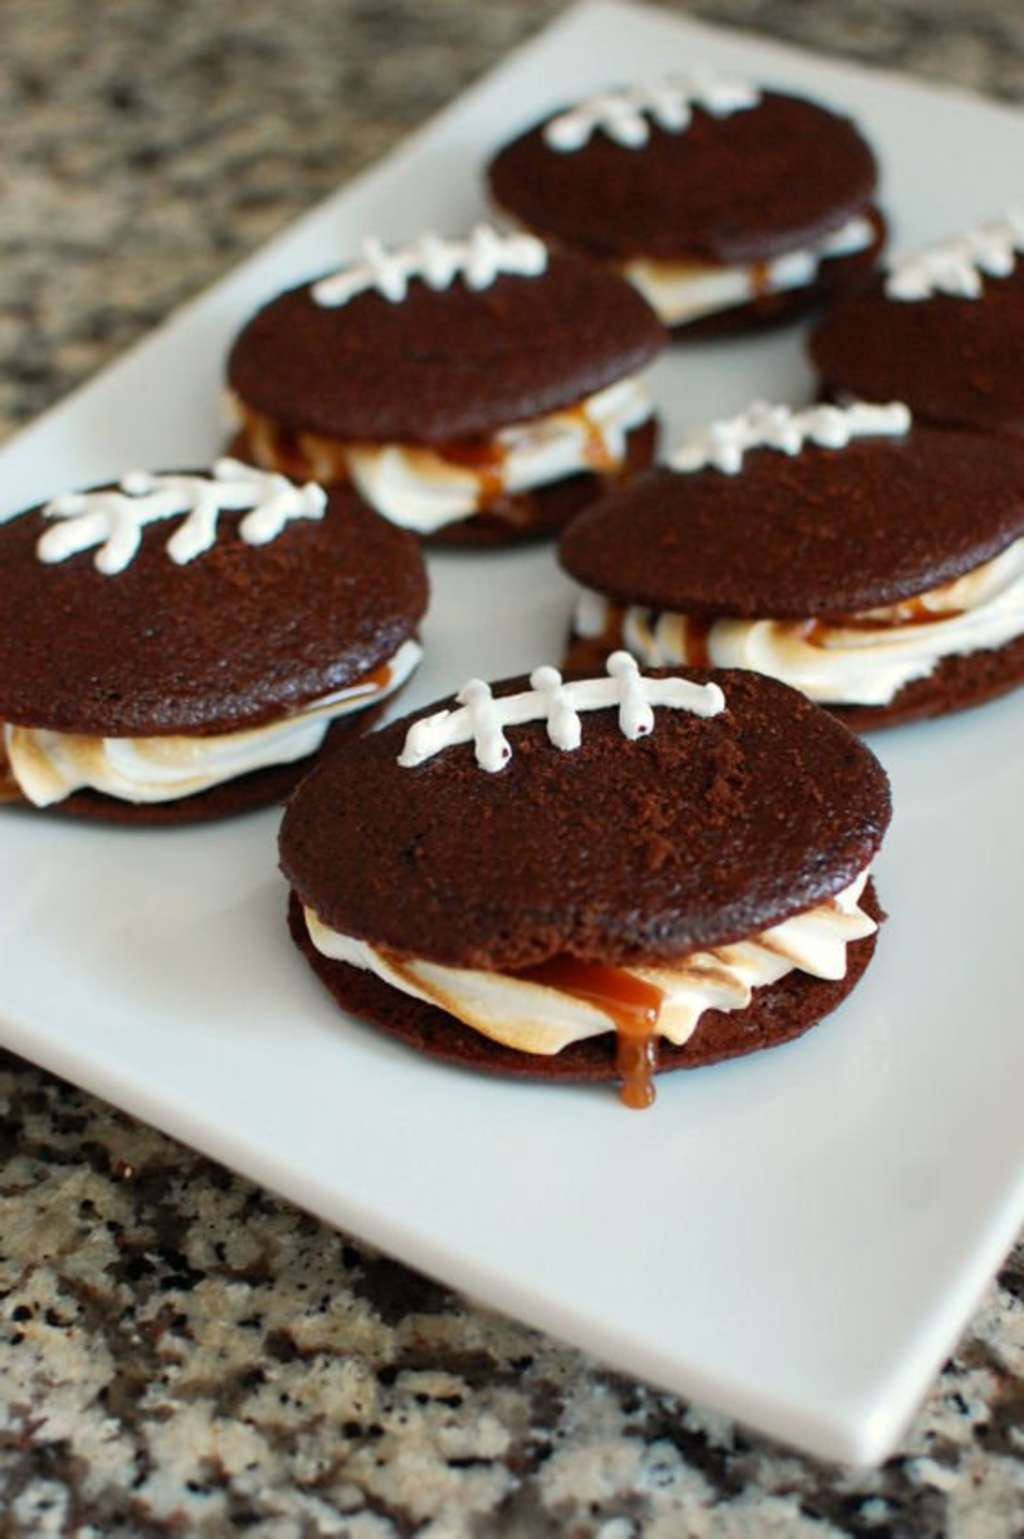 Desserts For Super Bowl Party
 8 Adorable Football Shaped Desserts for Your Super Bowl